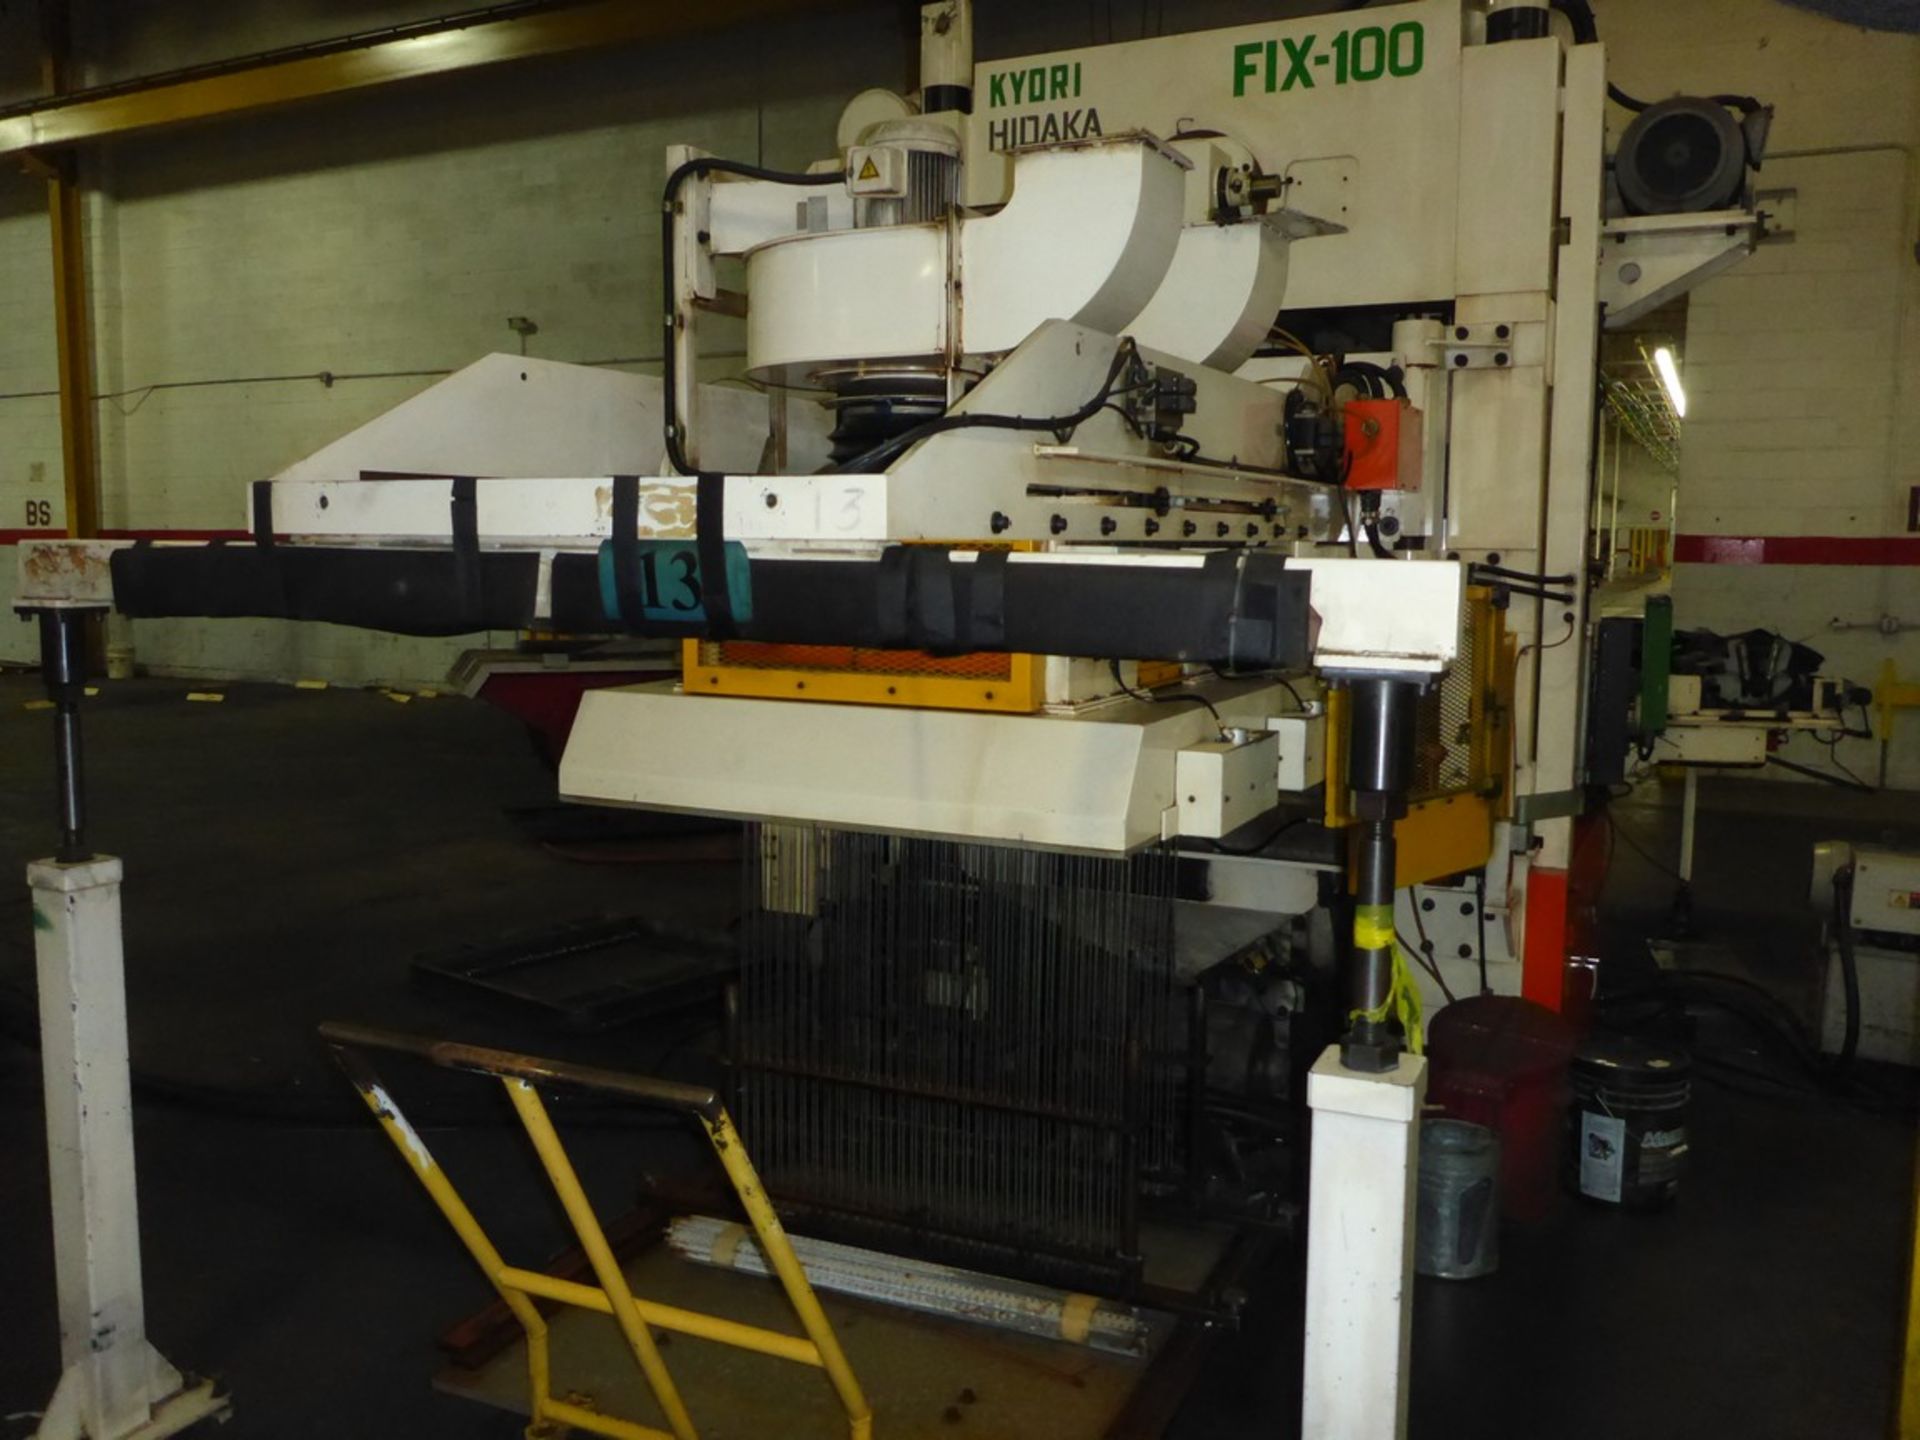 2006 Hidaka Mdl: FIX-100 Fin Press, S/N: 129046, Capacity: 100 tons (1000 kN), SPM: 150-300, - Image 20 of 22